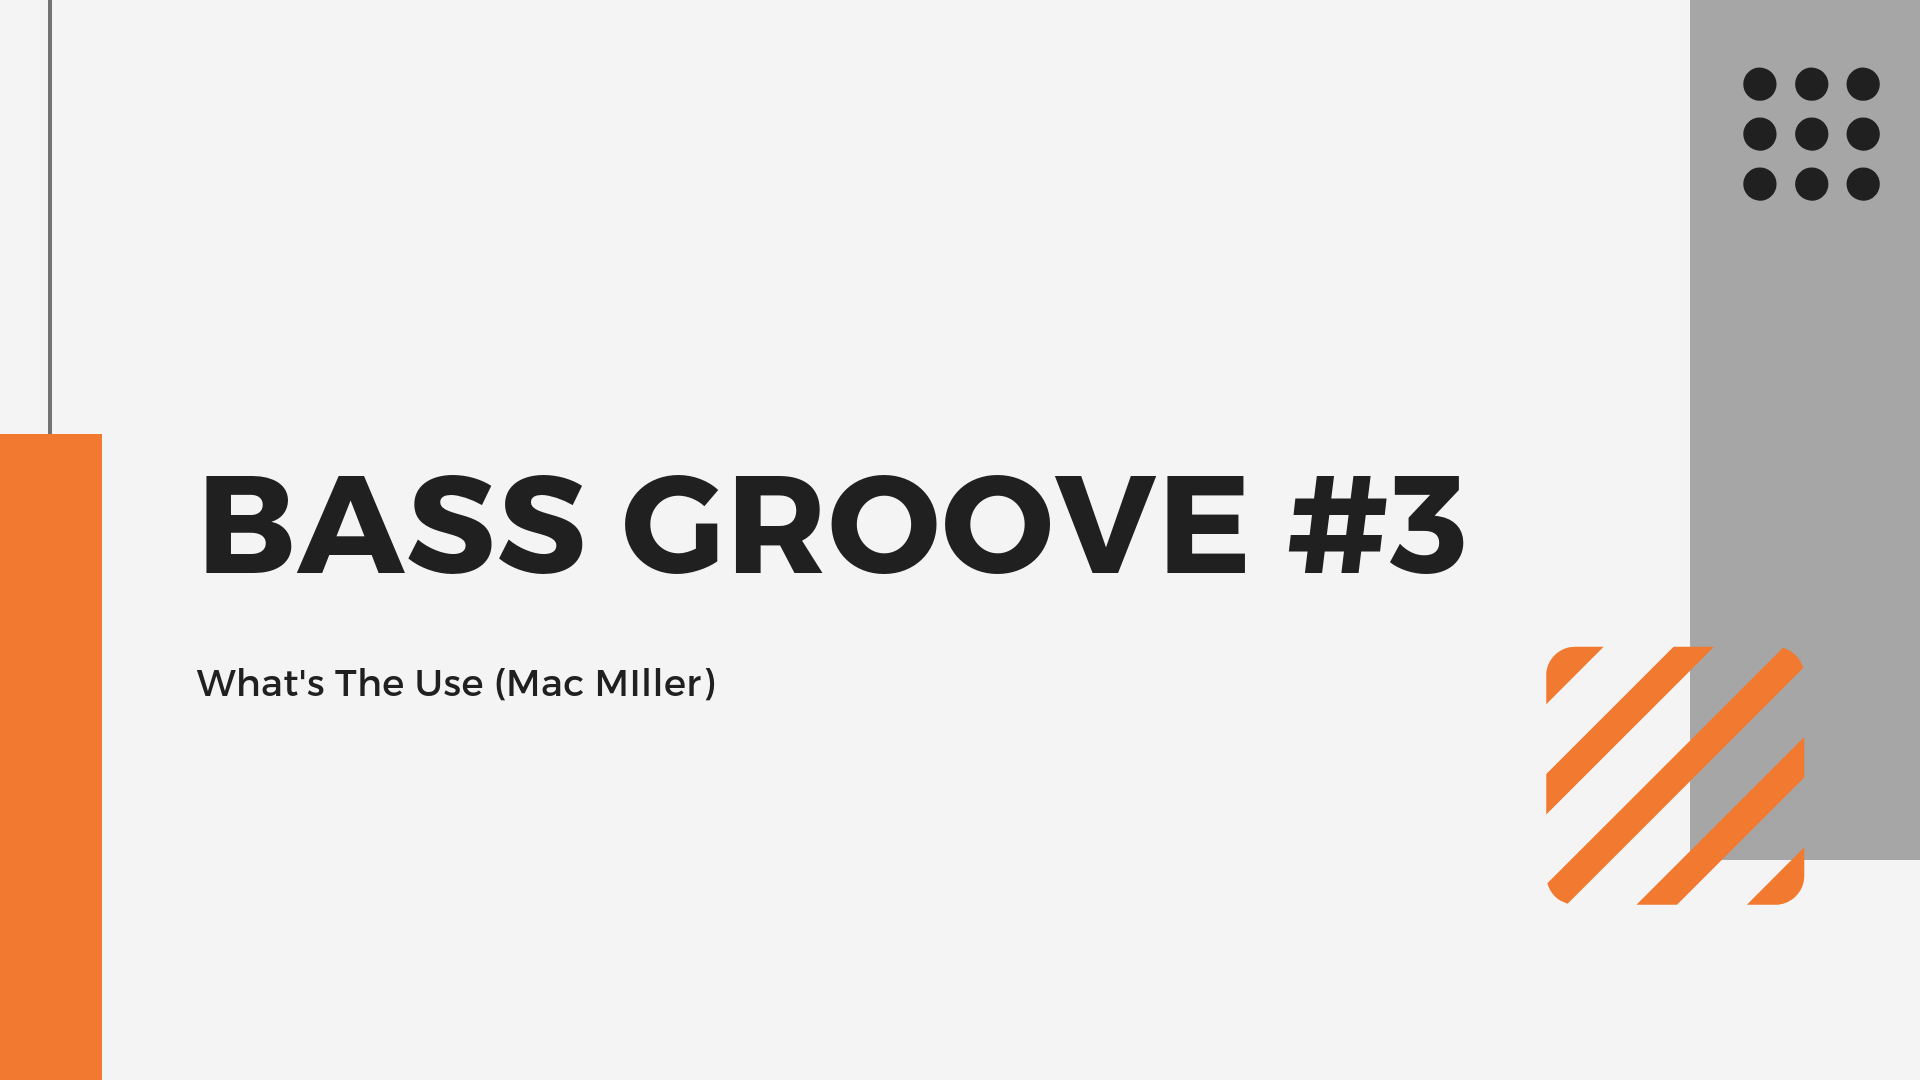 Bass Groove #3